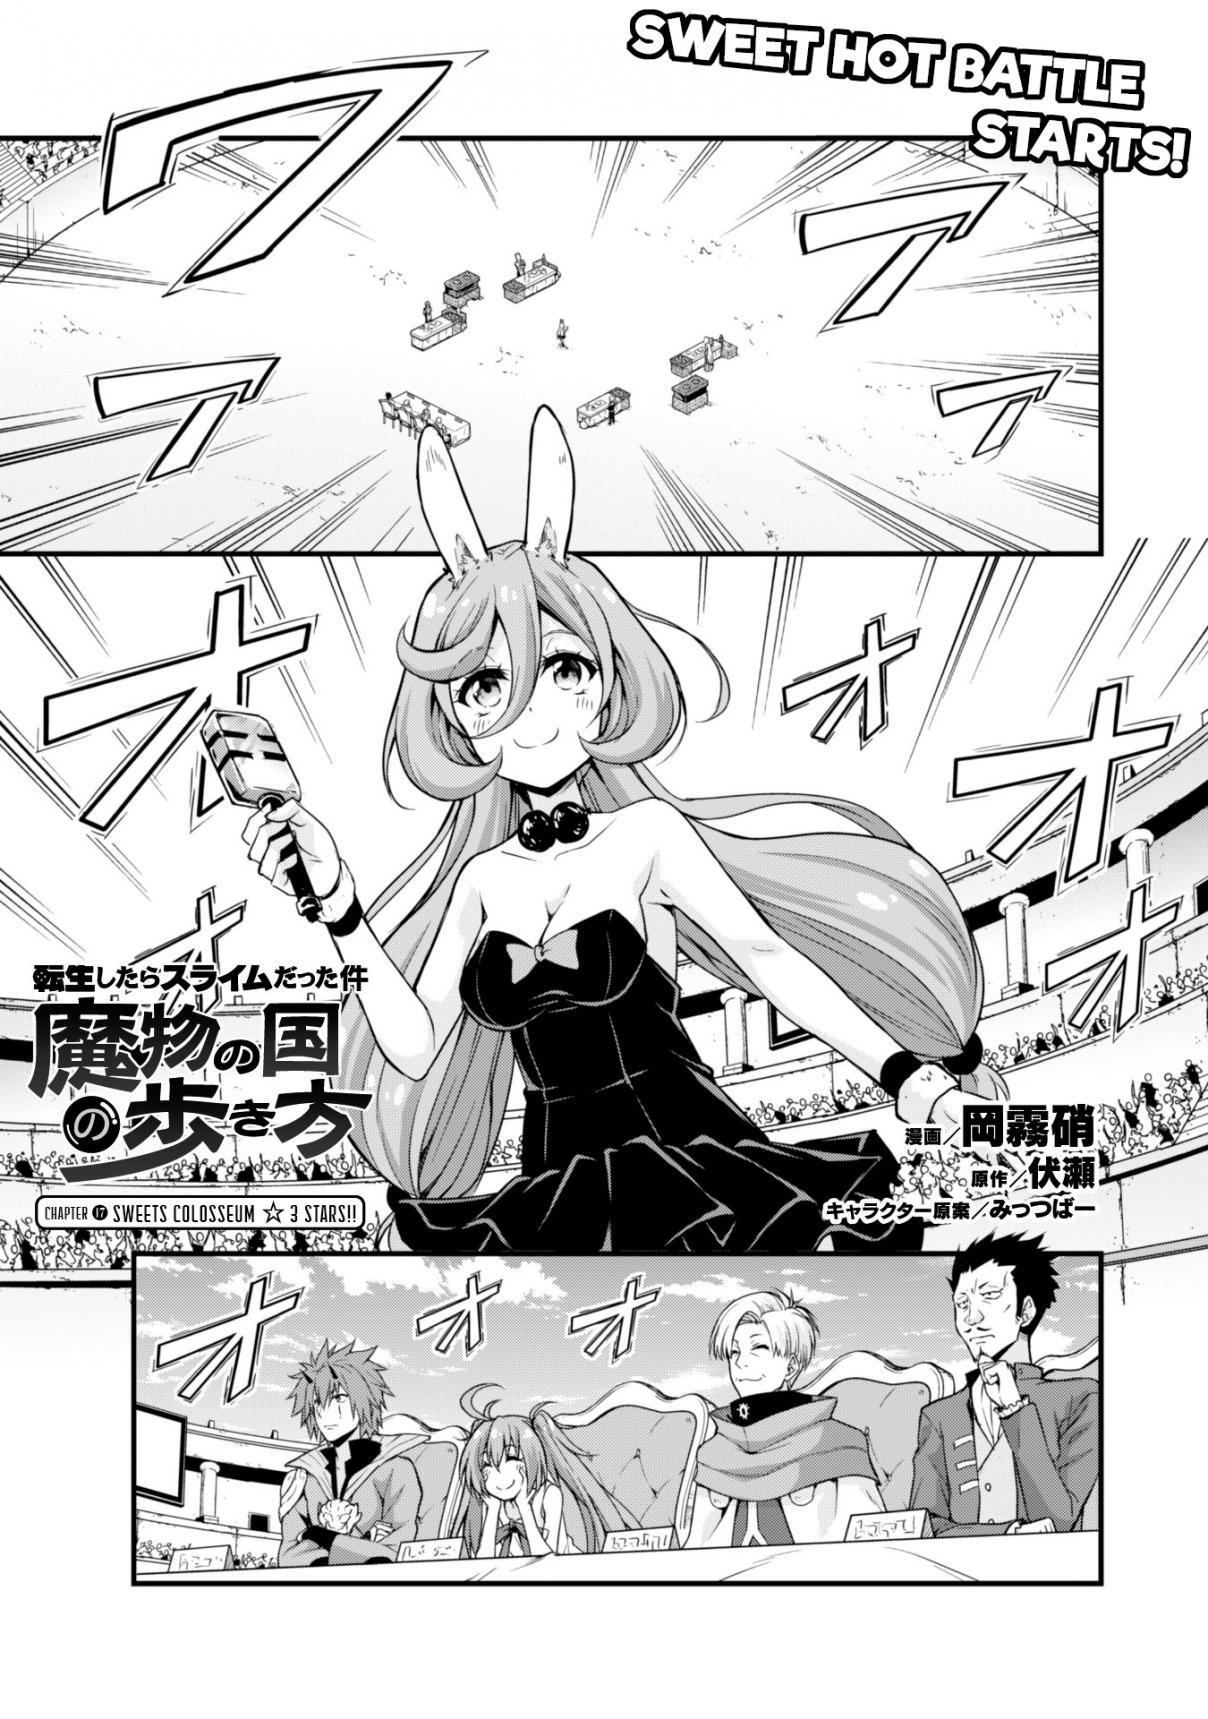 Tensei Shitara Slime Datta Ken: Mamono no Kuni no Arukikata Vol. 3 Ch. 17 Sweets Colosseum ☆ 3 Stars!!